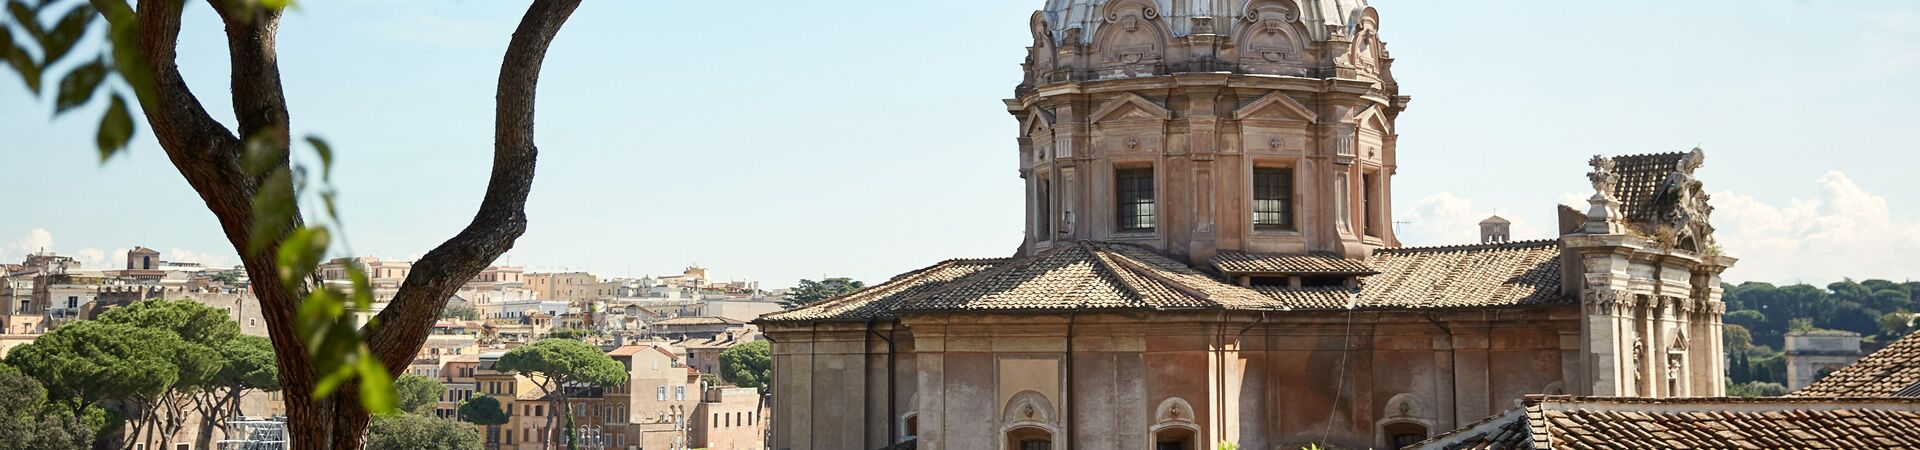 Dual-Degree MBA Housing in Dollars | John Cabot University | Rome, Italy